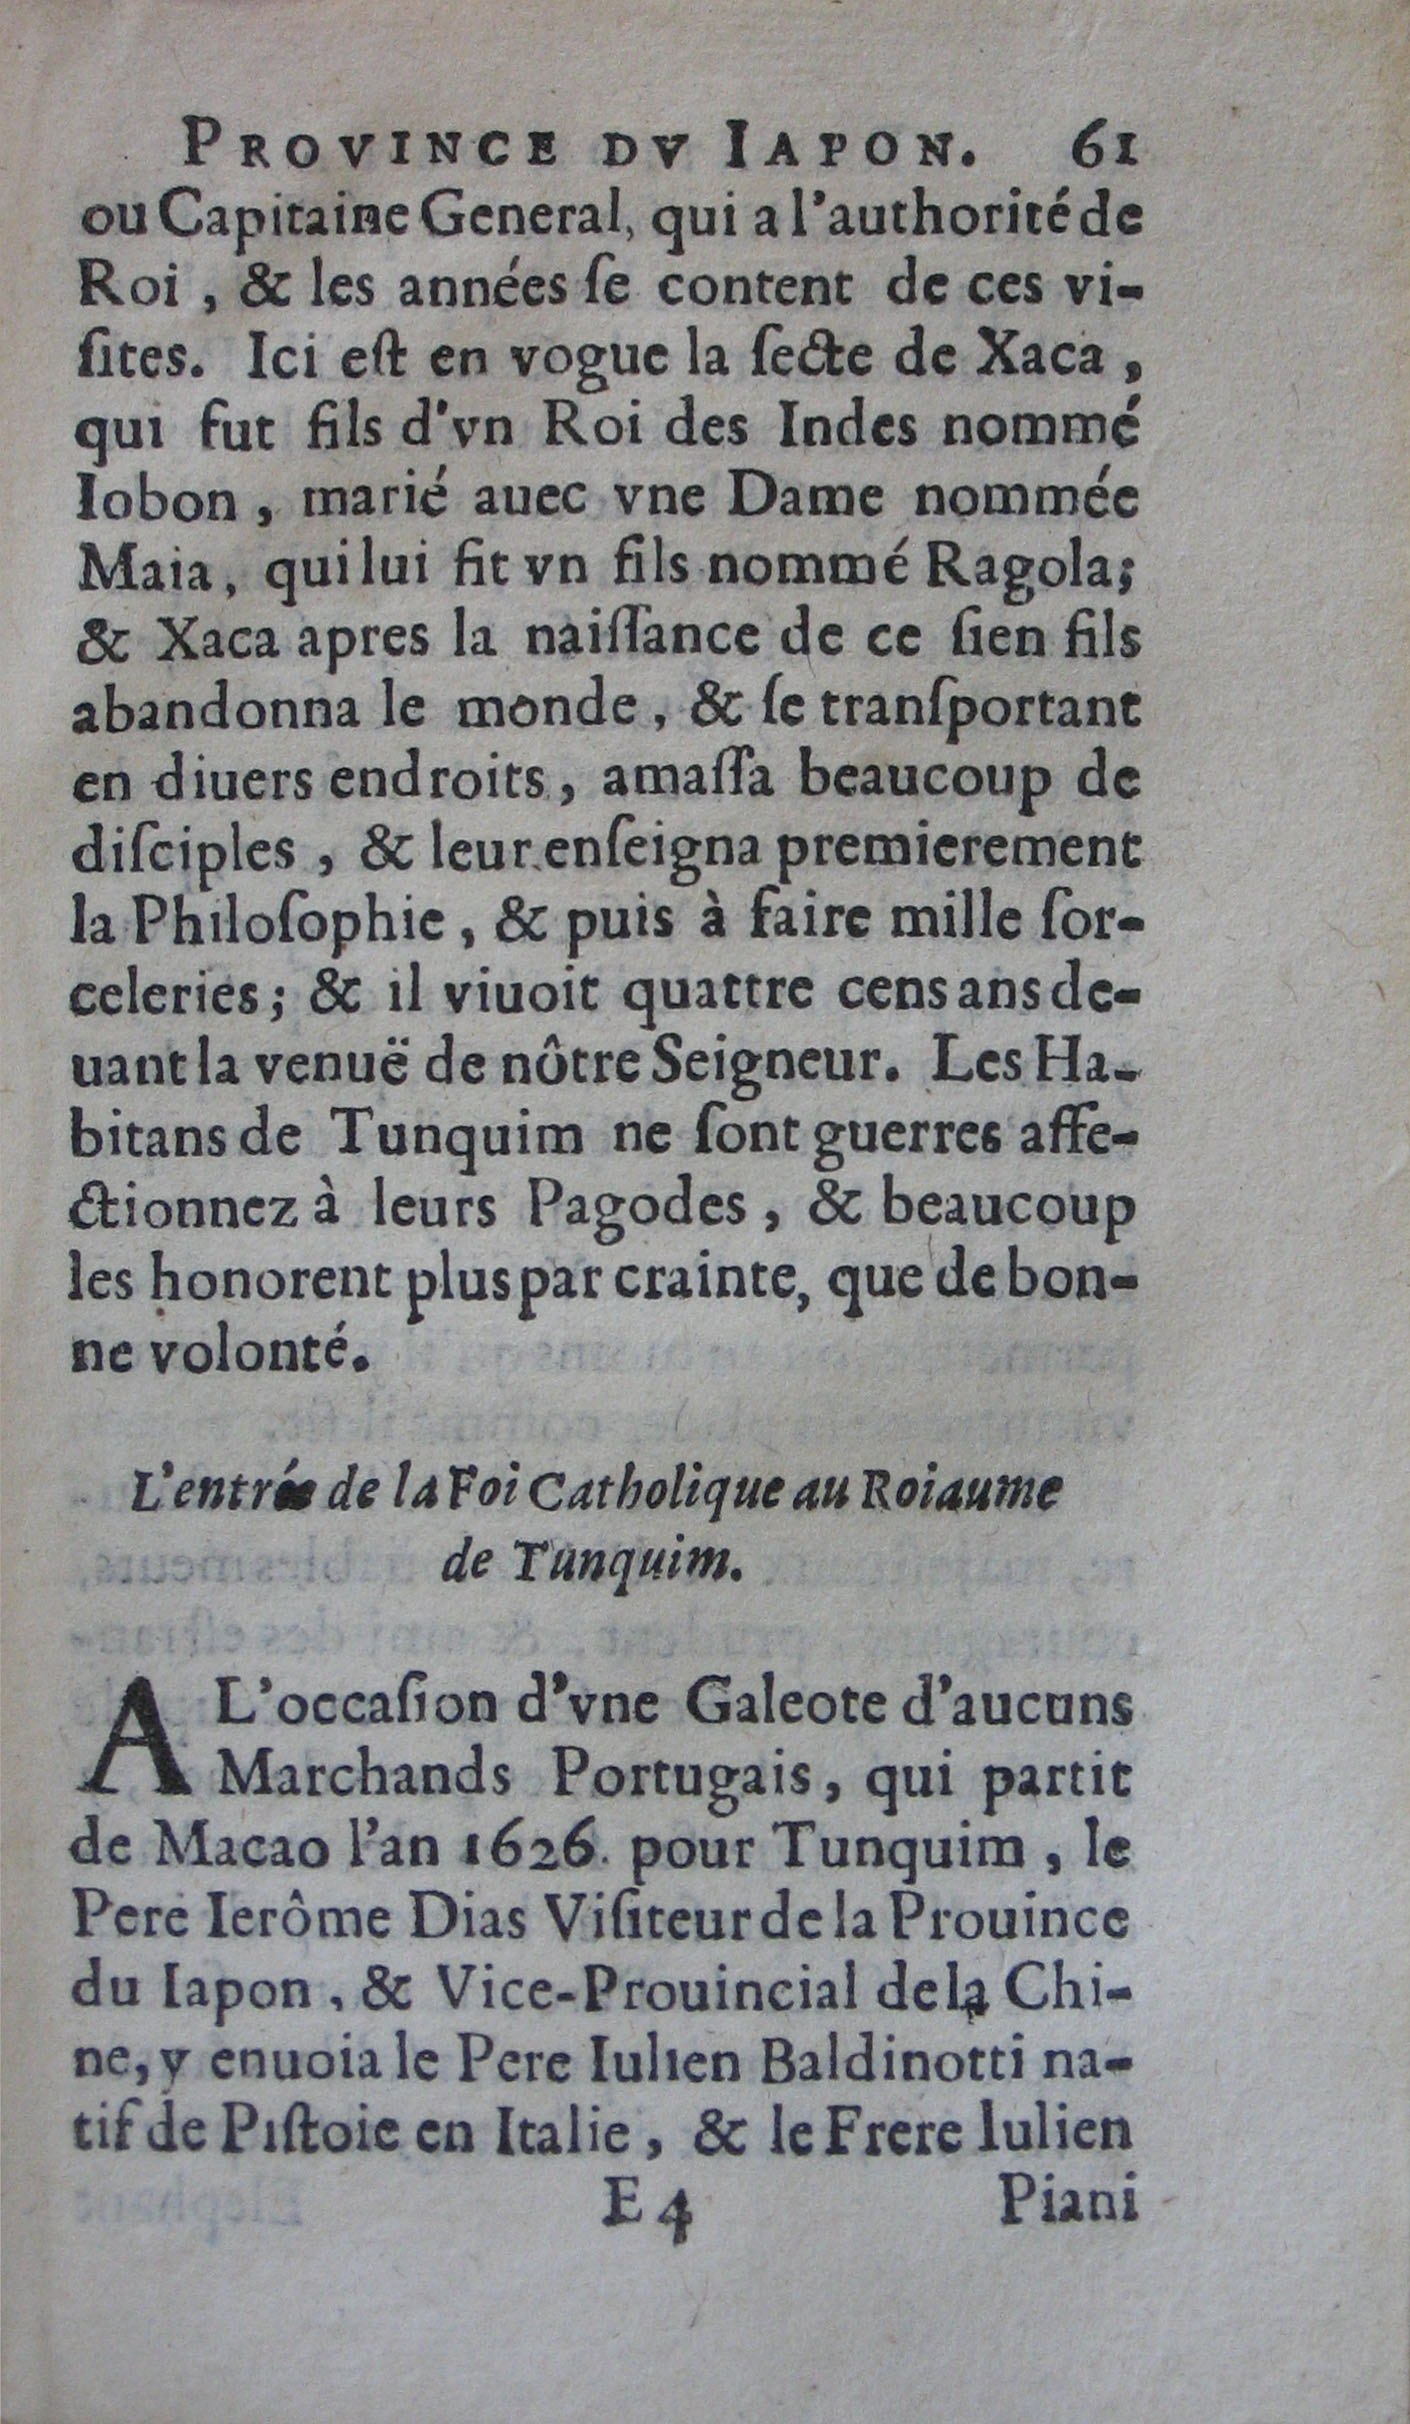 p. 61.JPG